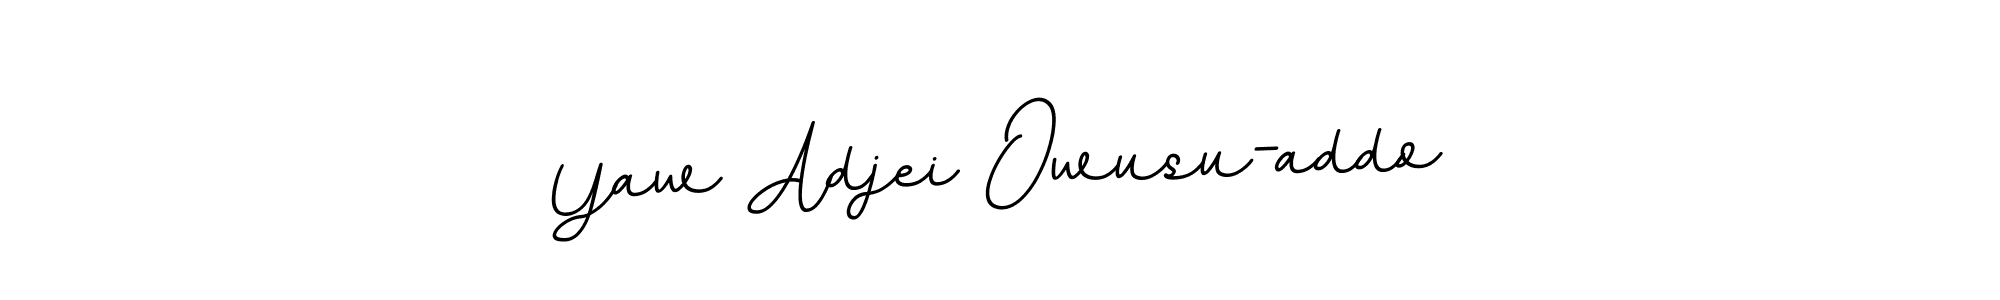 How to Draw Yaw Adjei Owusu-addo signature style? BallpointsItalic-DORy9 is a latest design signature styles for name Yaw Adjei Owusu-addo. Yaw Adjei Owusu-addo signature style 11 images and pictures png